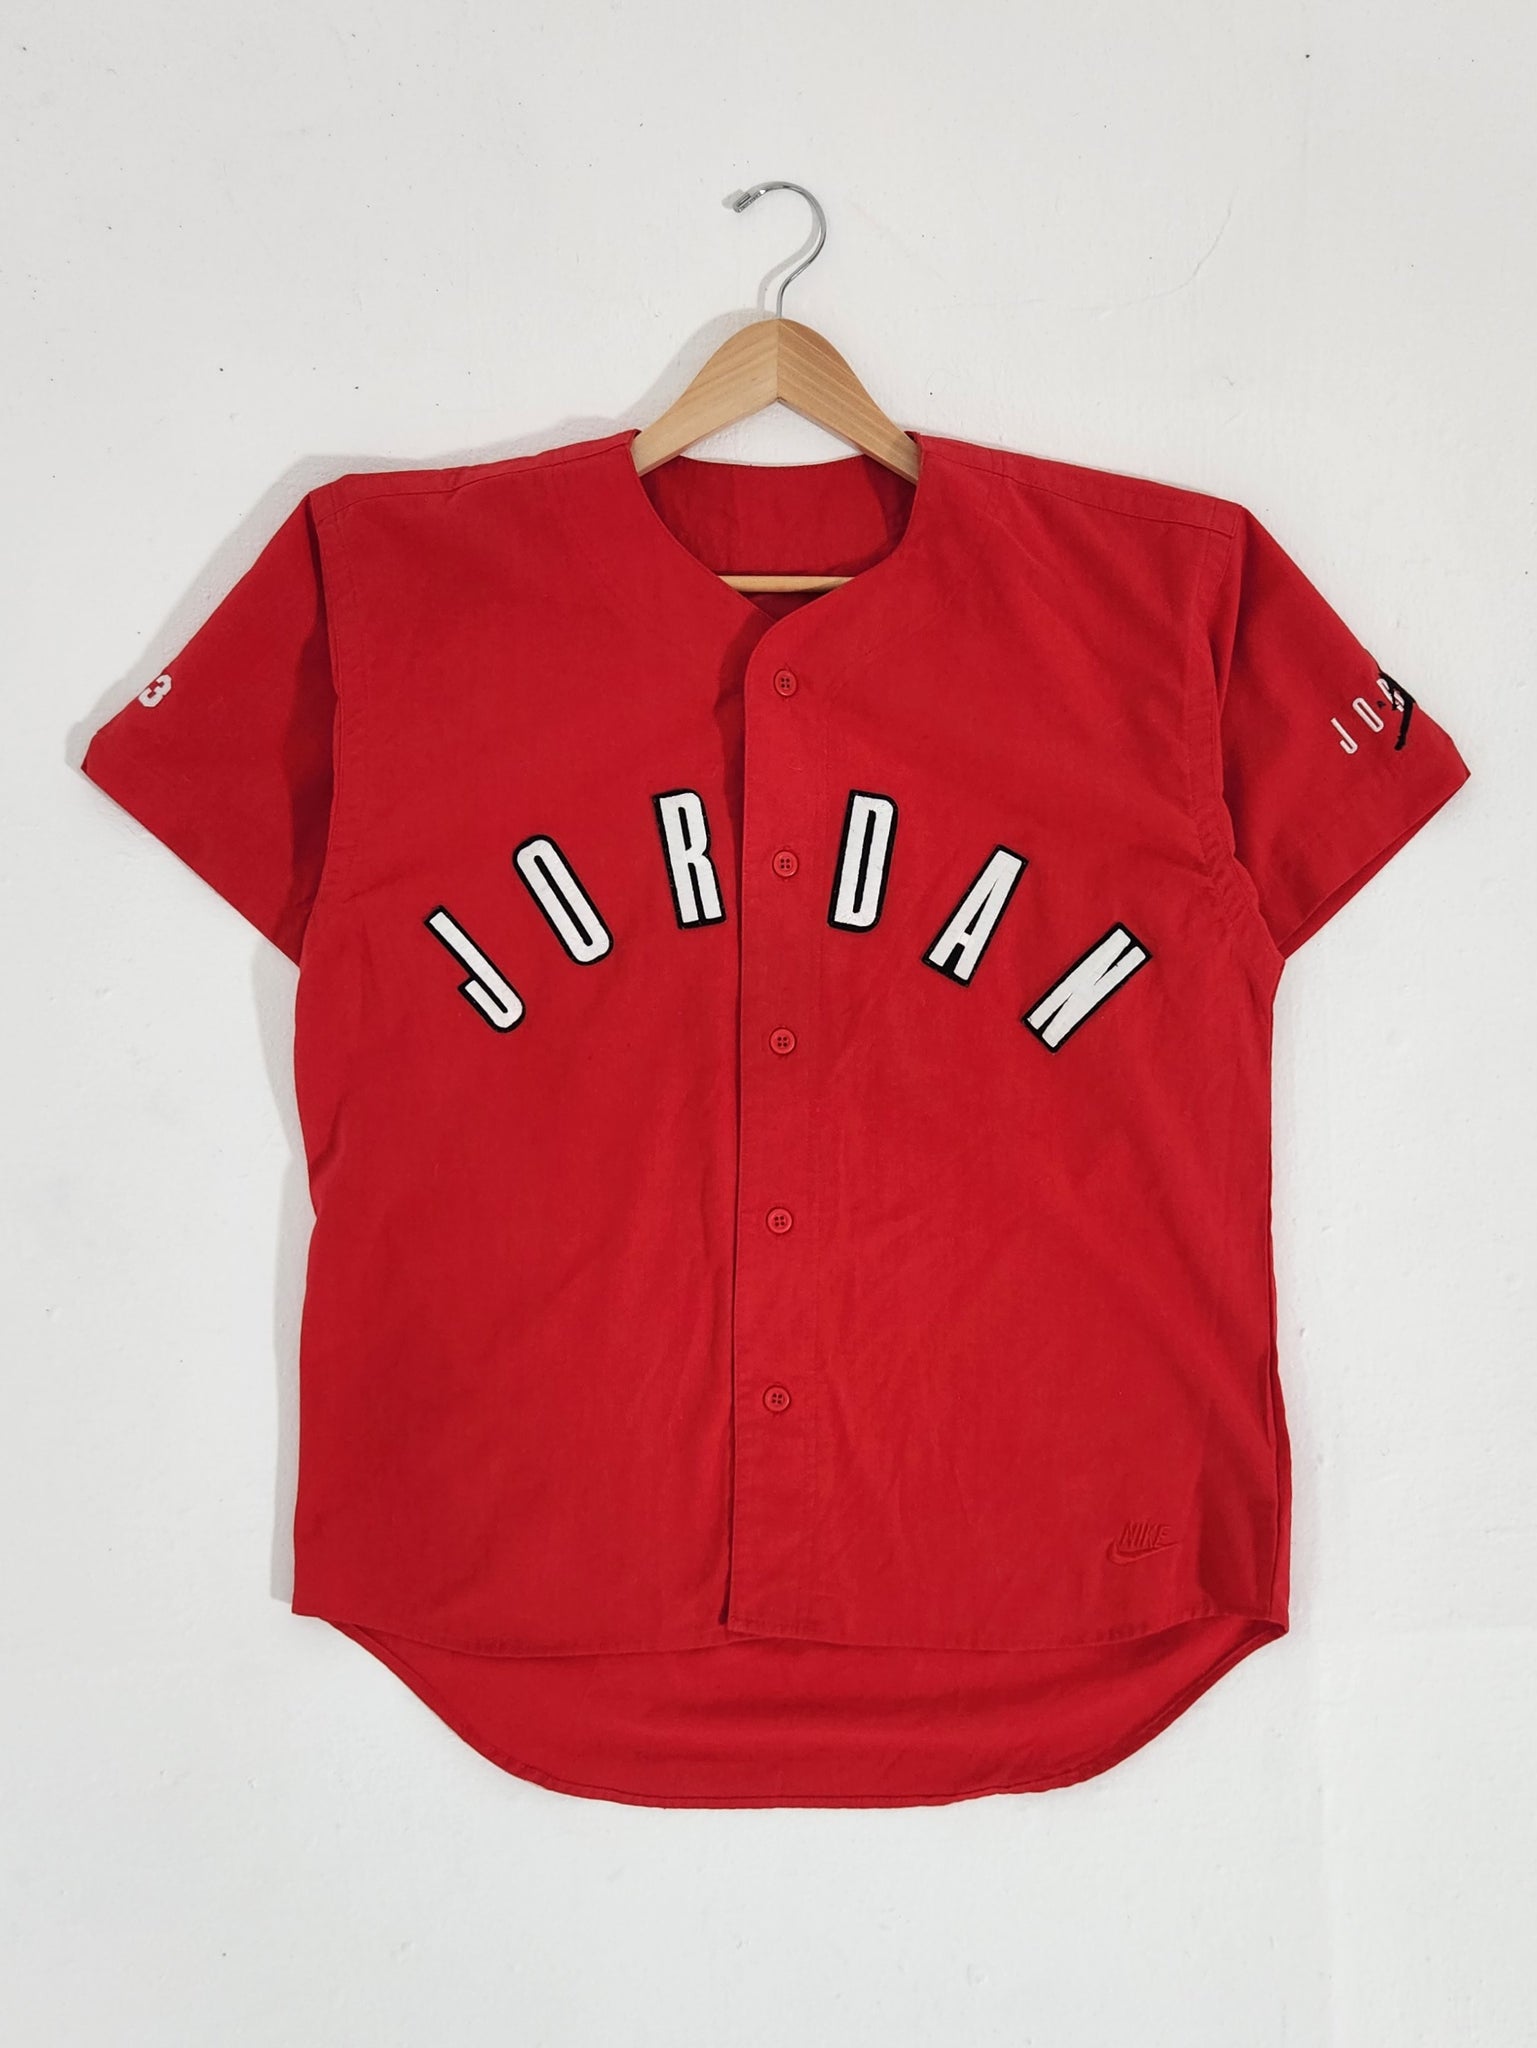 Vintage 1990s NIKE Michael Jordan Spelled Out Red Baseball Jersey Sz.